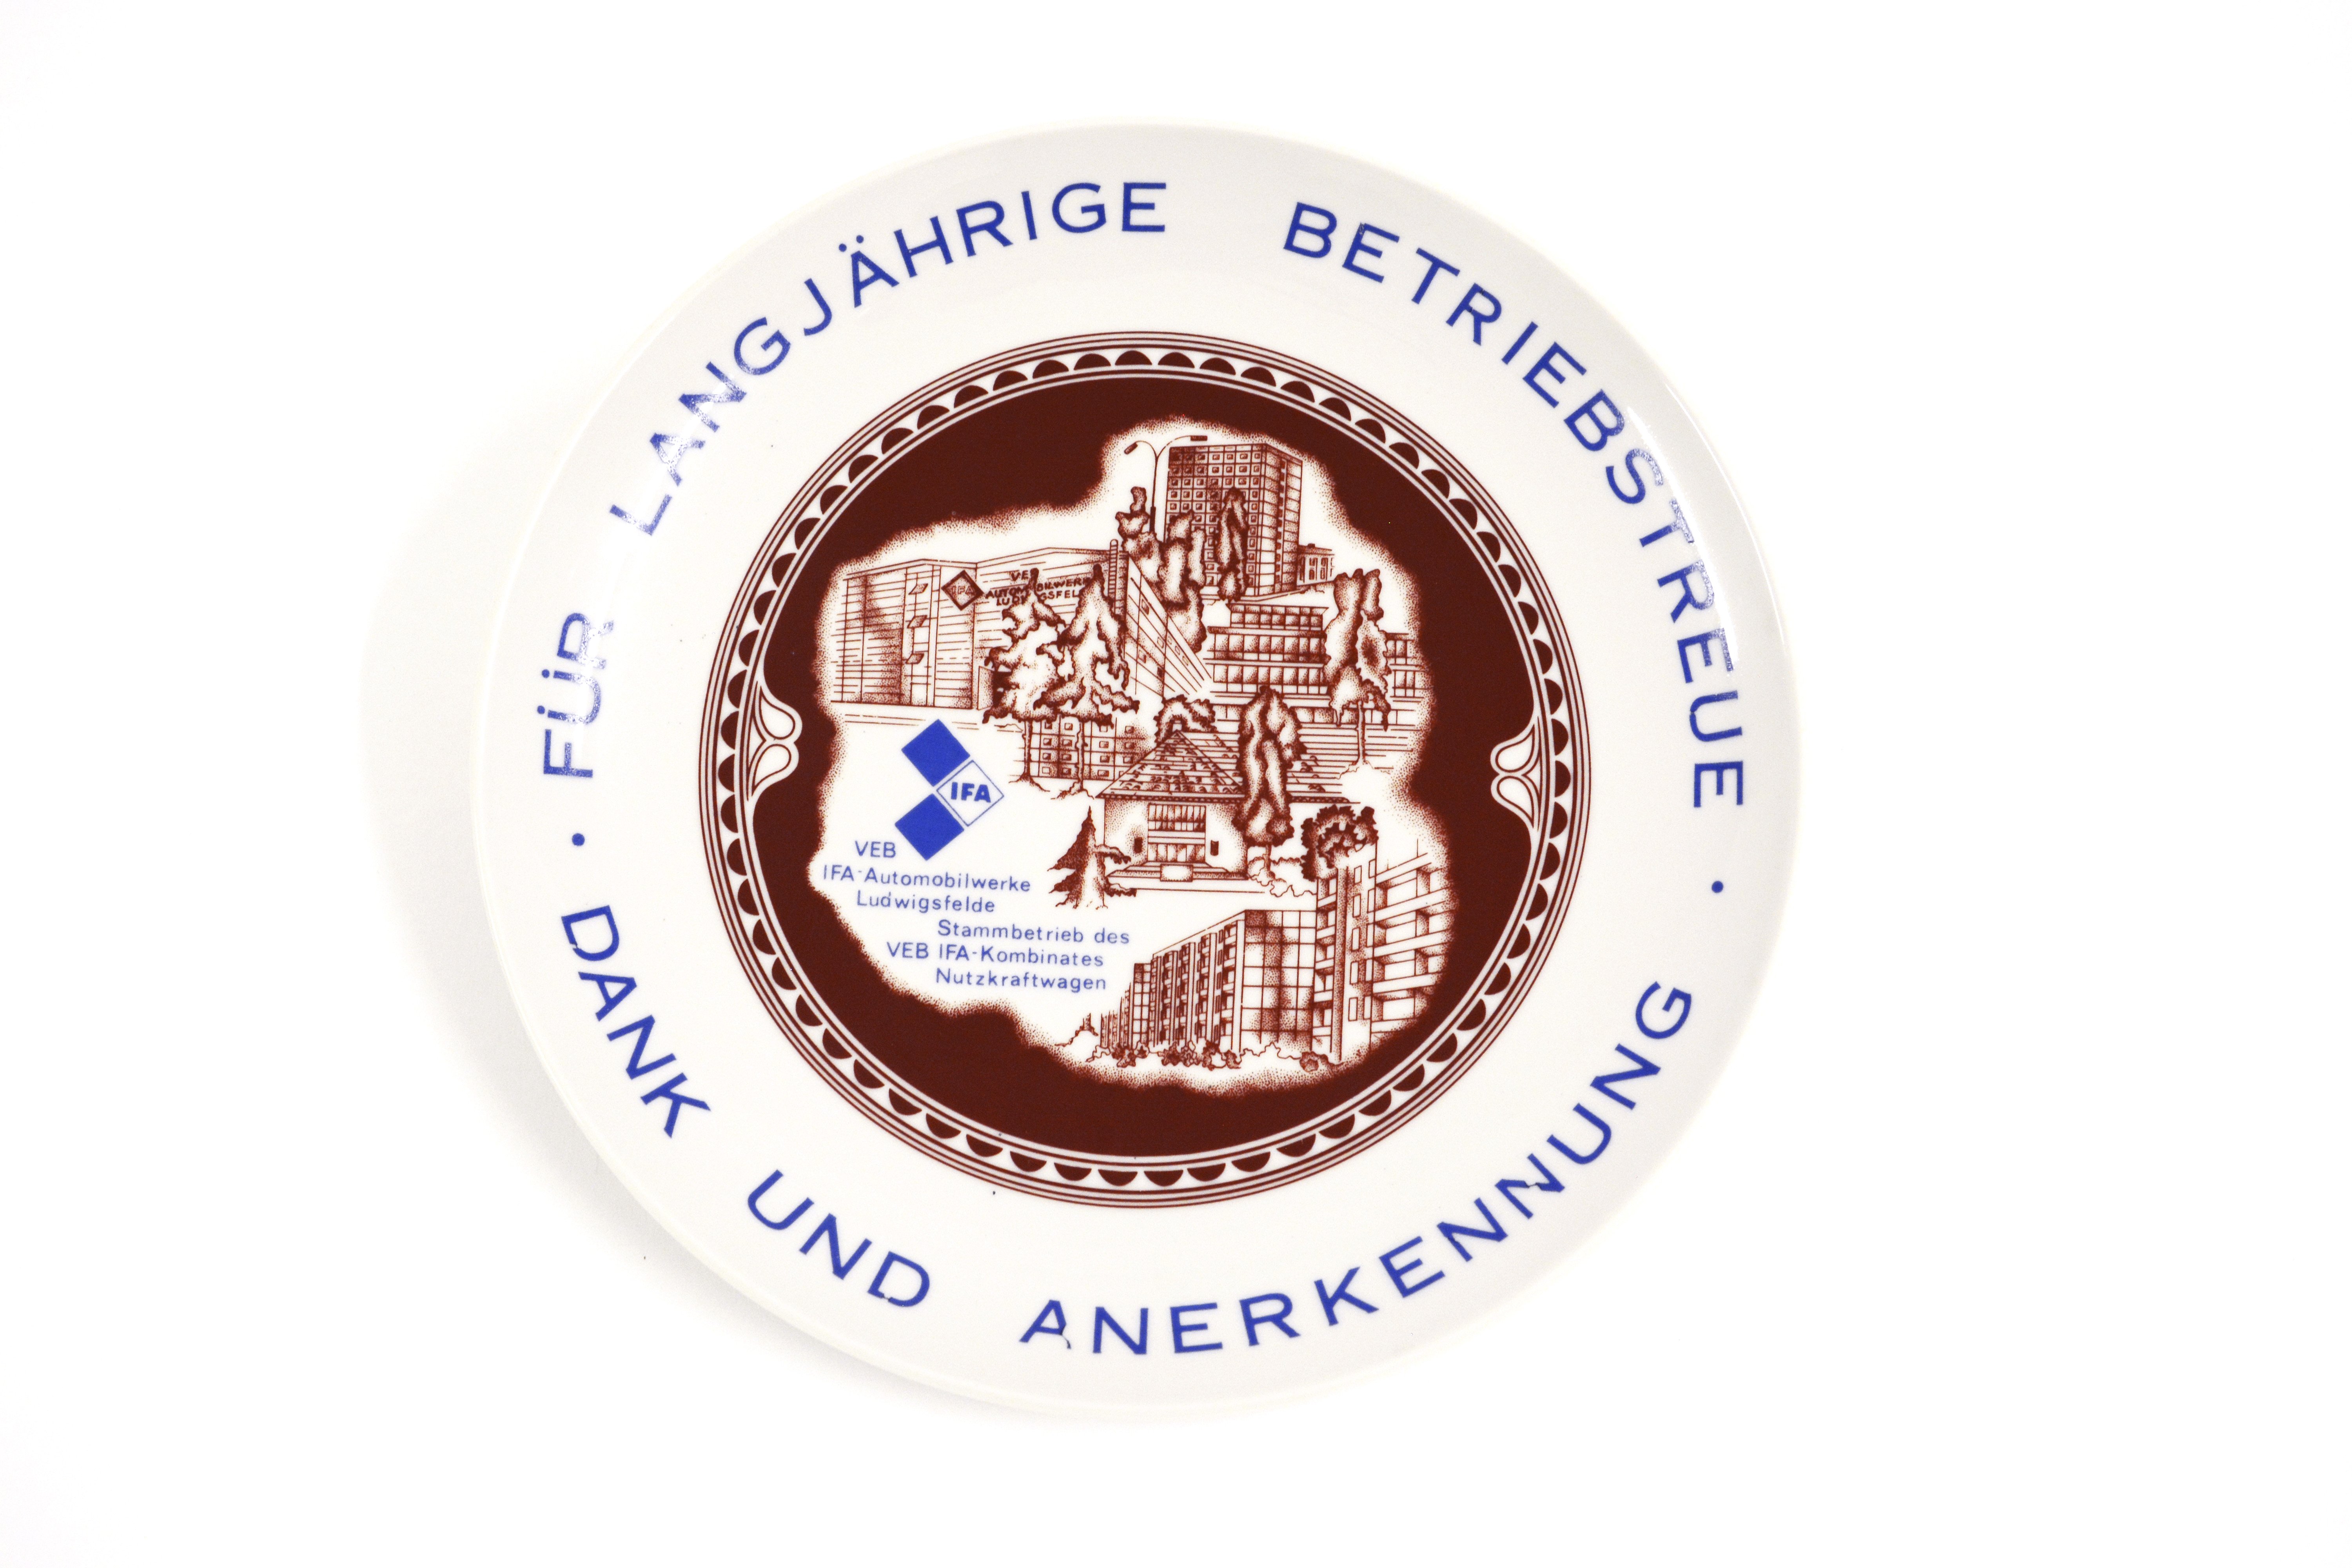 Schmuckteller "IFA - Langjährige Betriebstreue" (Stadt- und Technikmuseum Ludwigsfelde CC BY-NC-SA)